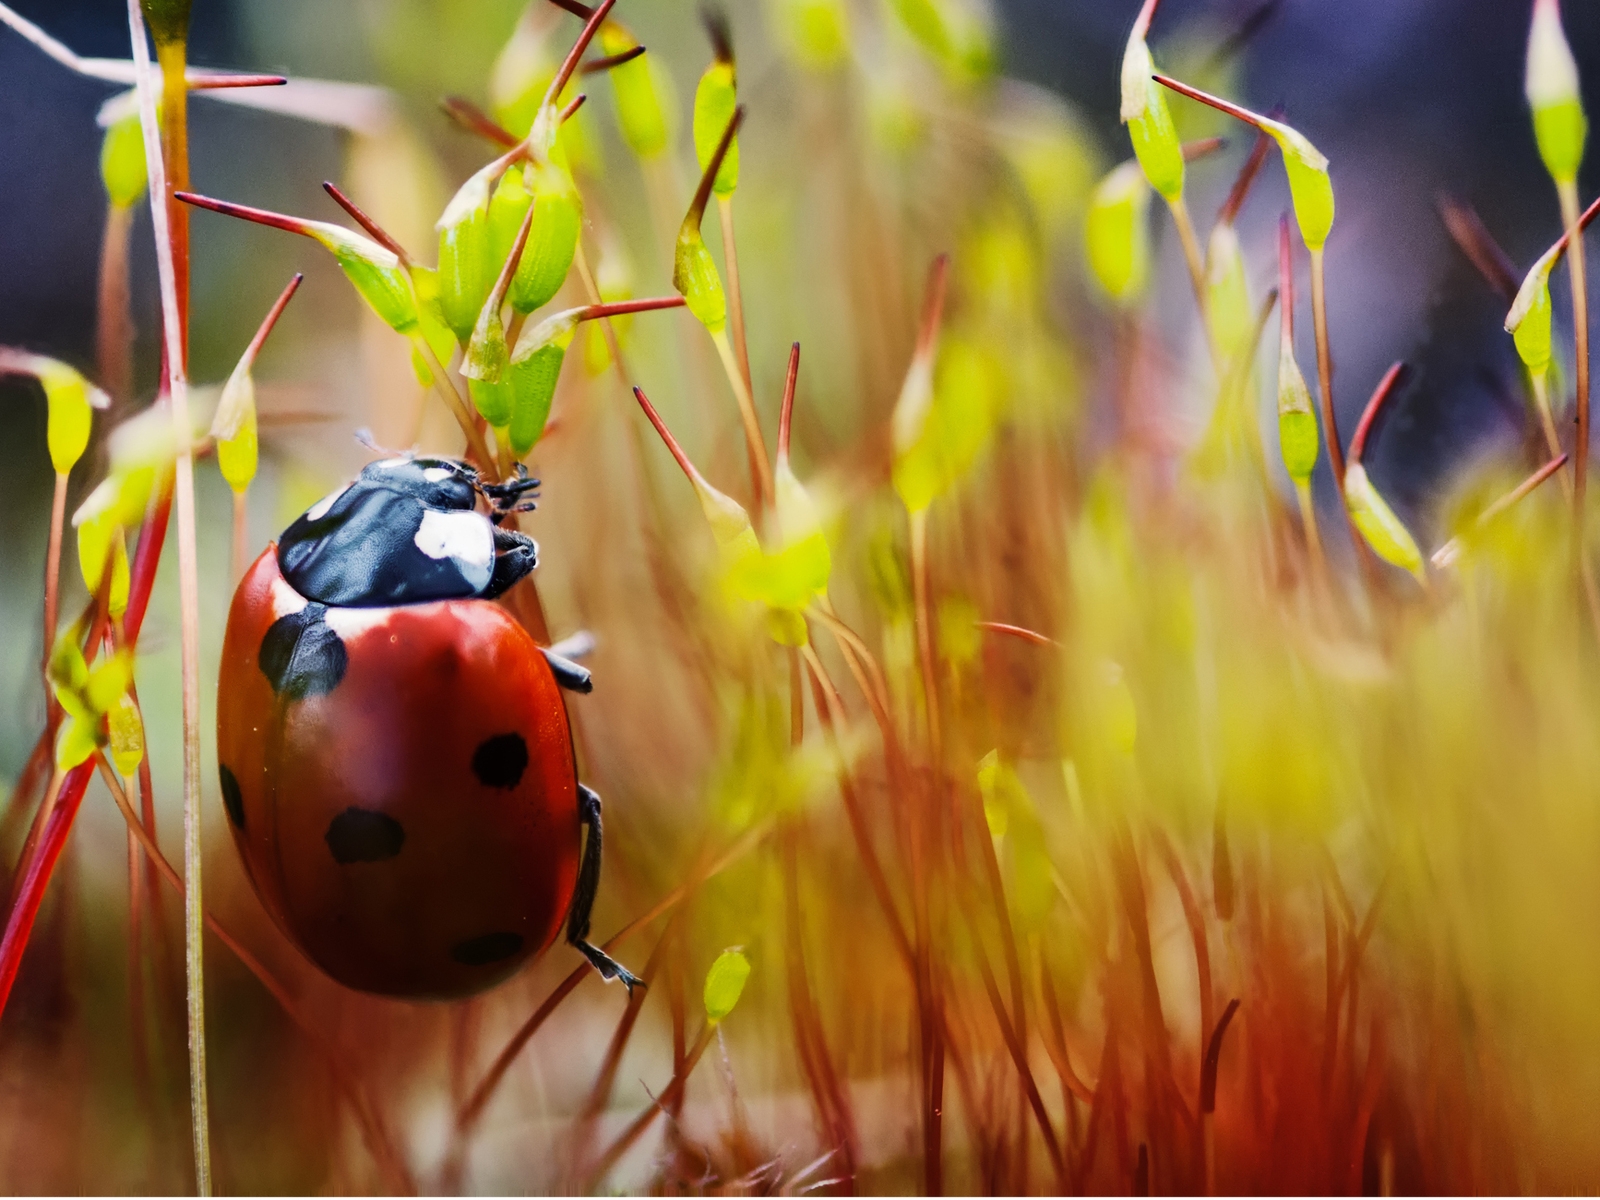 Red Ladybug Macro Photo for 1600 x 1200 resolution